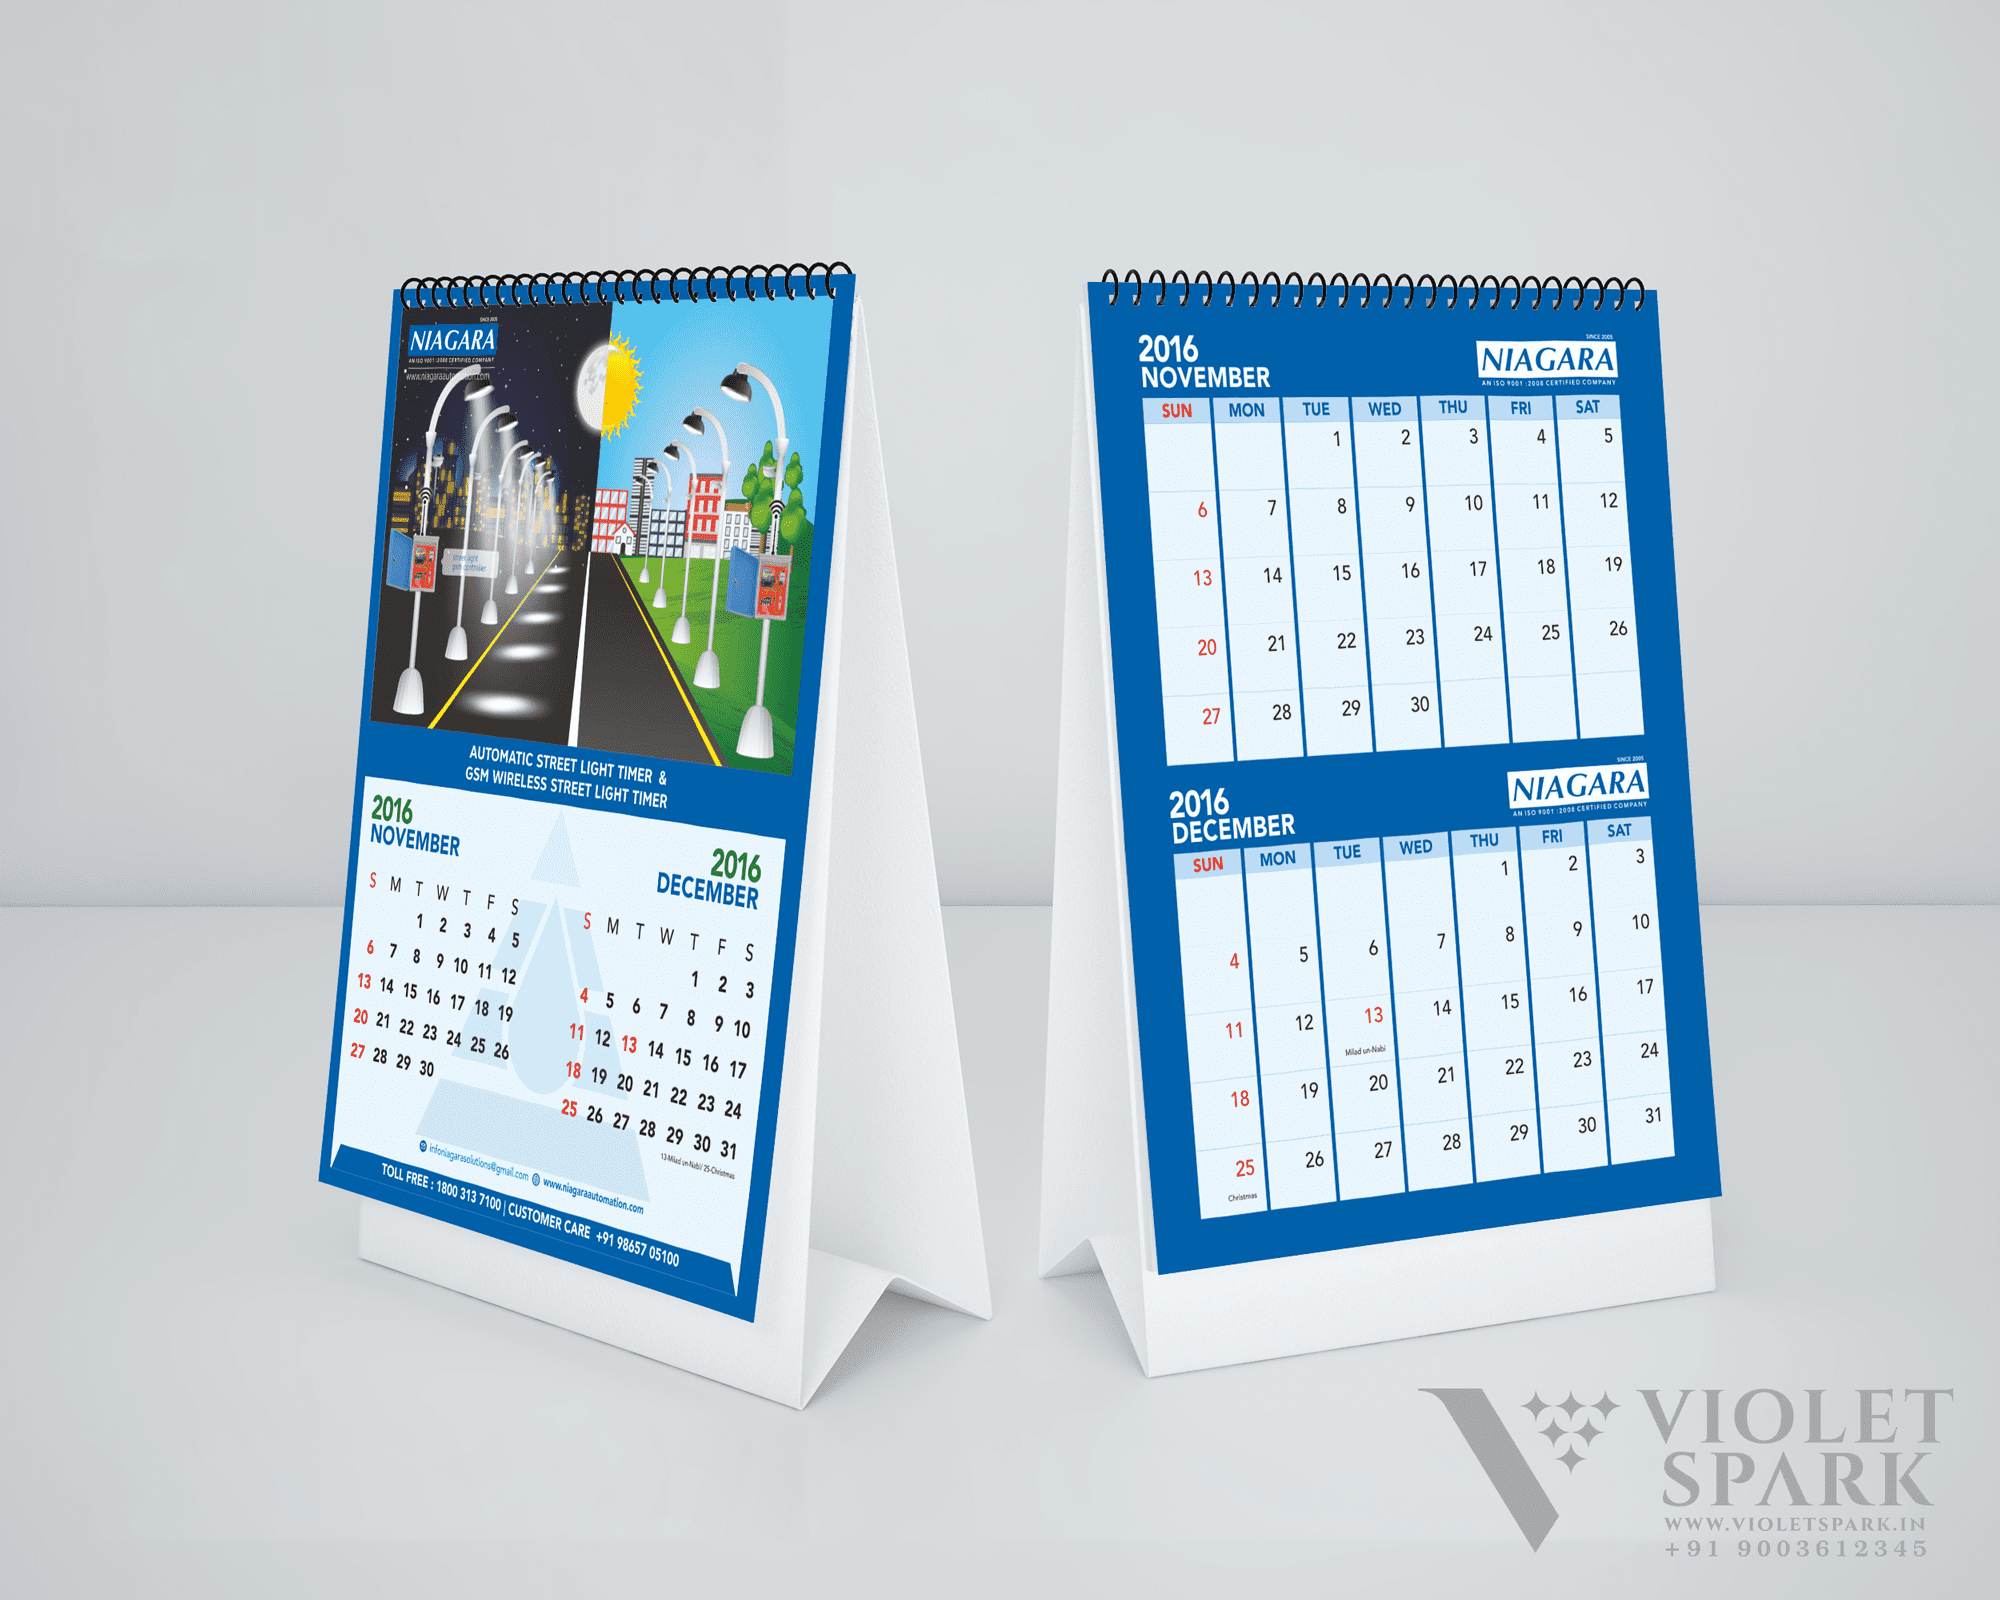 Niagara Solutions Calendar Branding Design Digital Marketing in Erode by Violet Spark